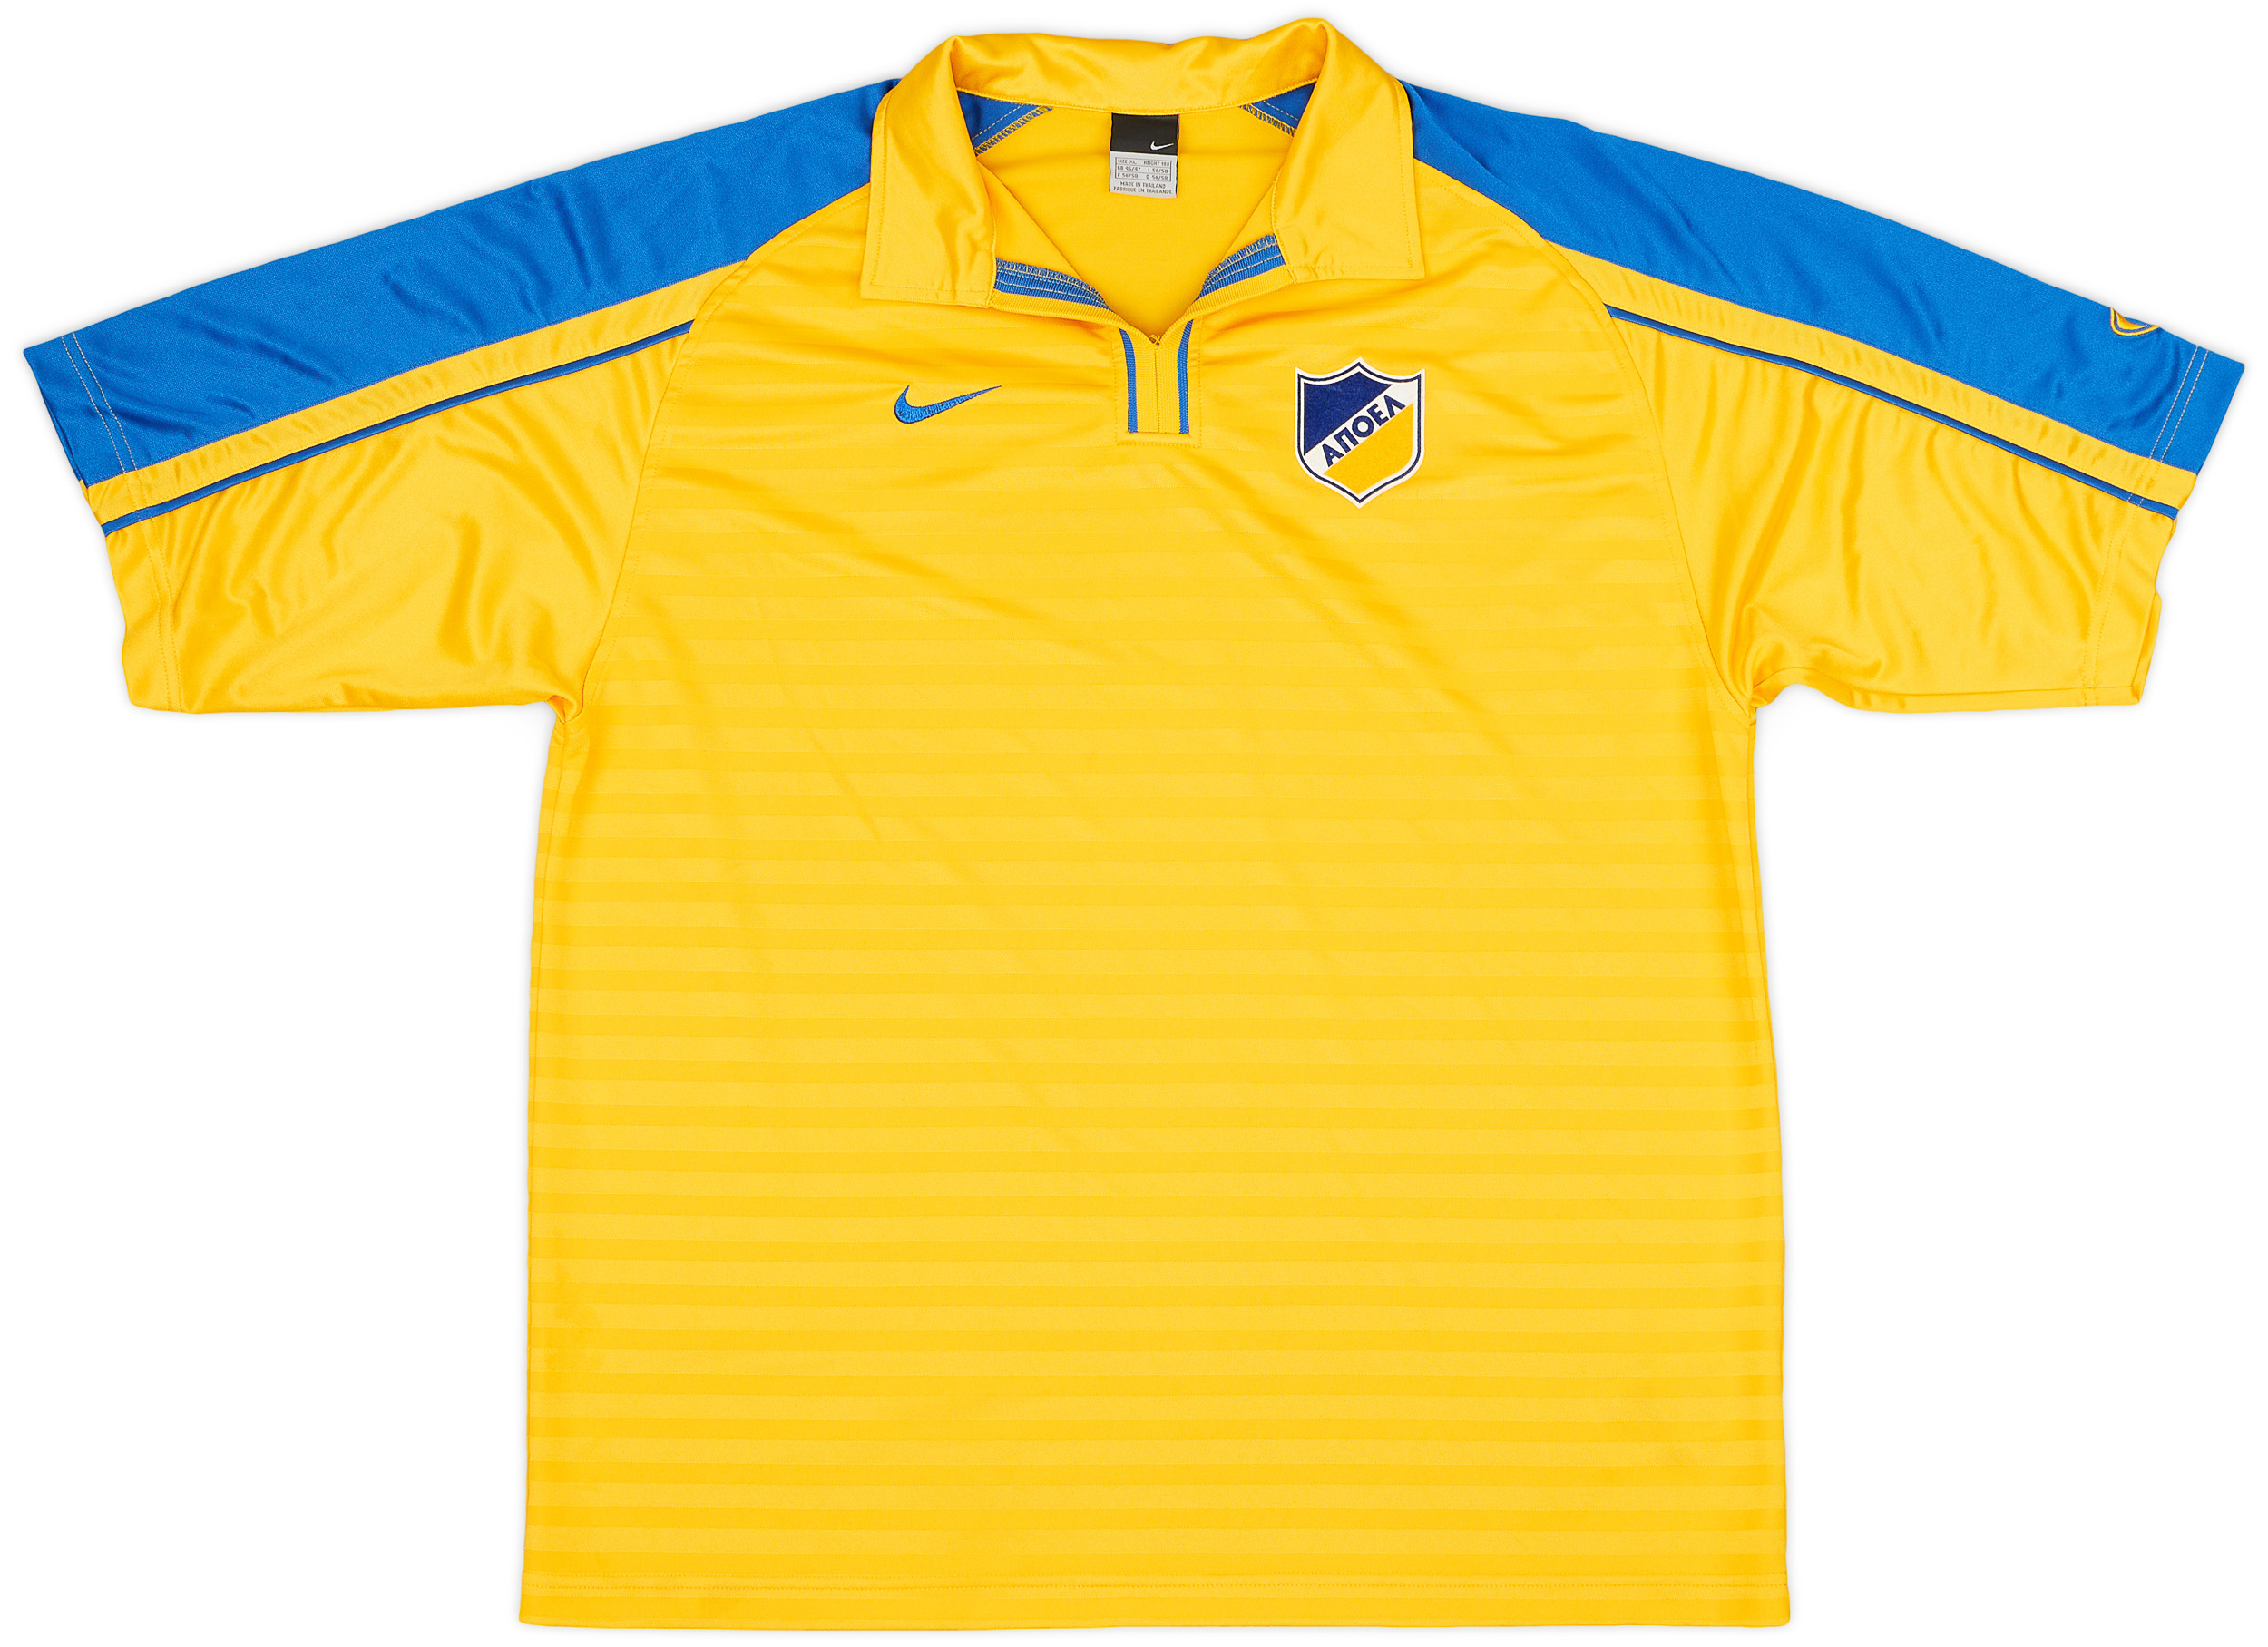 APOEL  home camisa (Original)